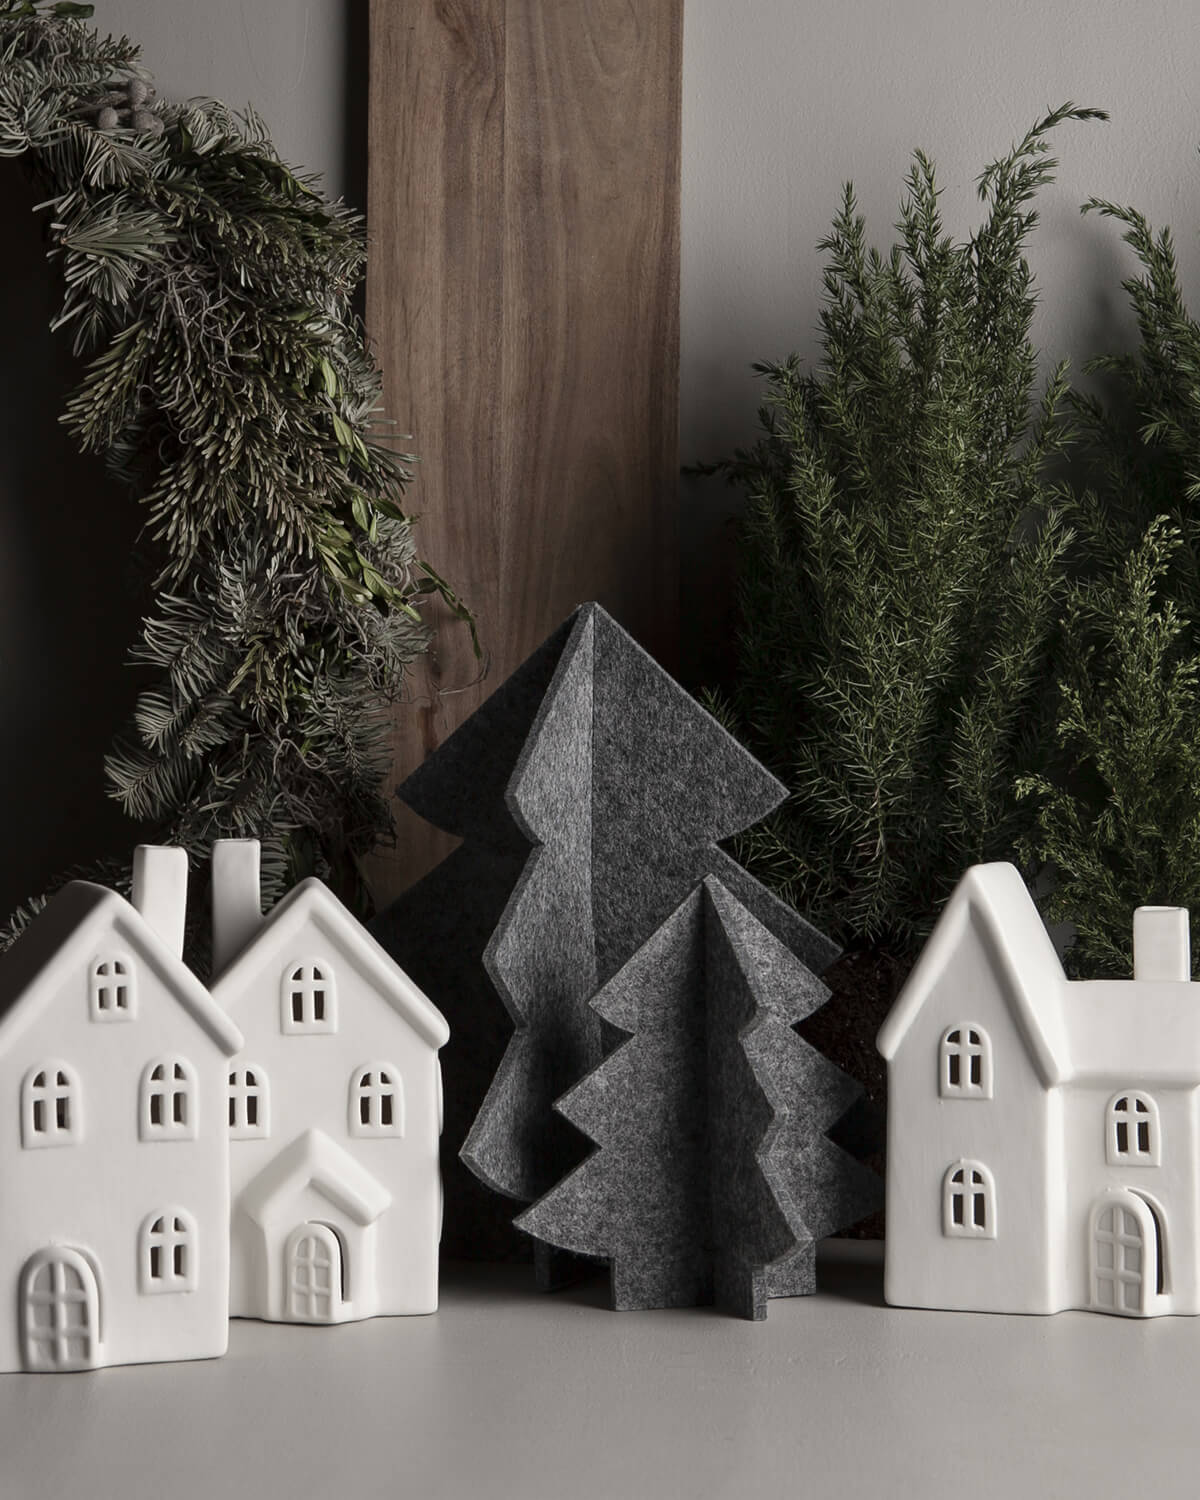 Ceramic Christmas House Ornaments festive decorations at Lifestory